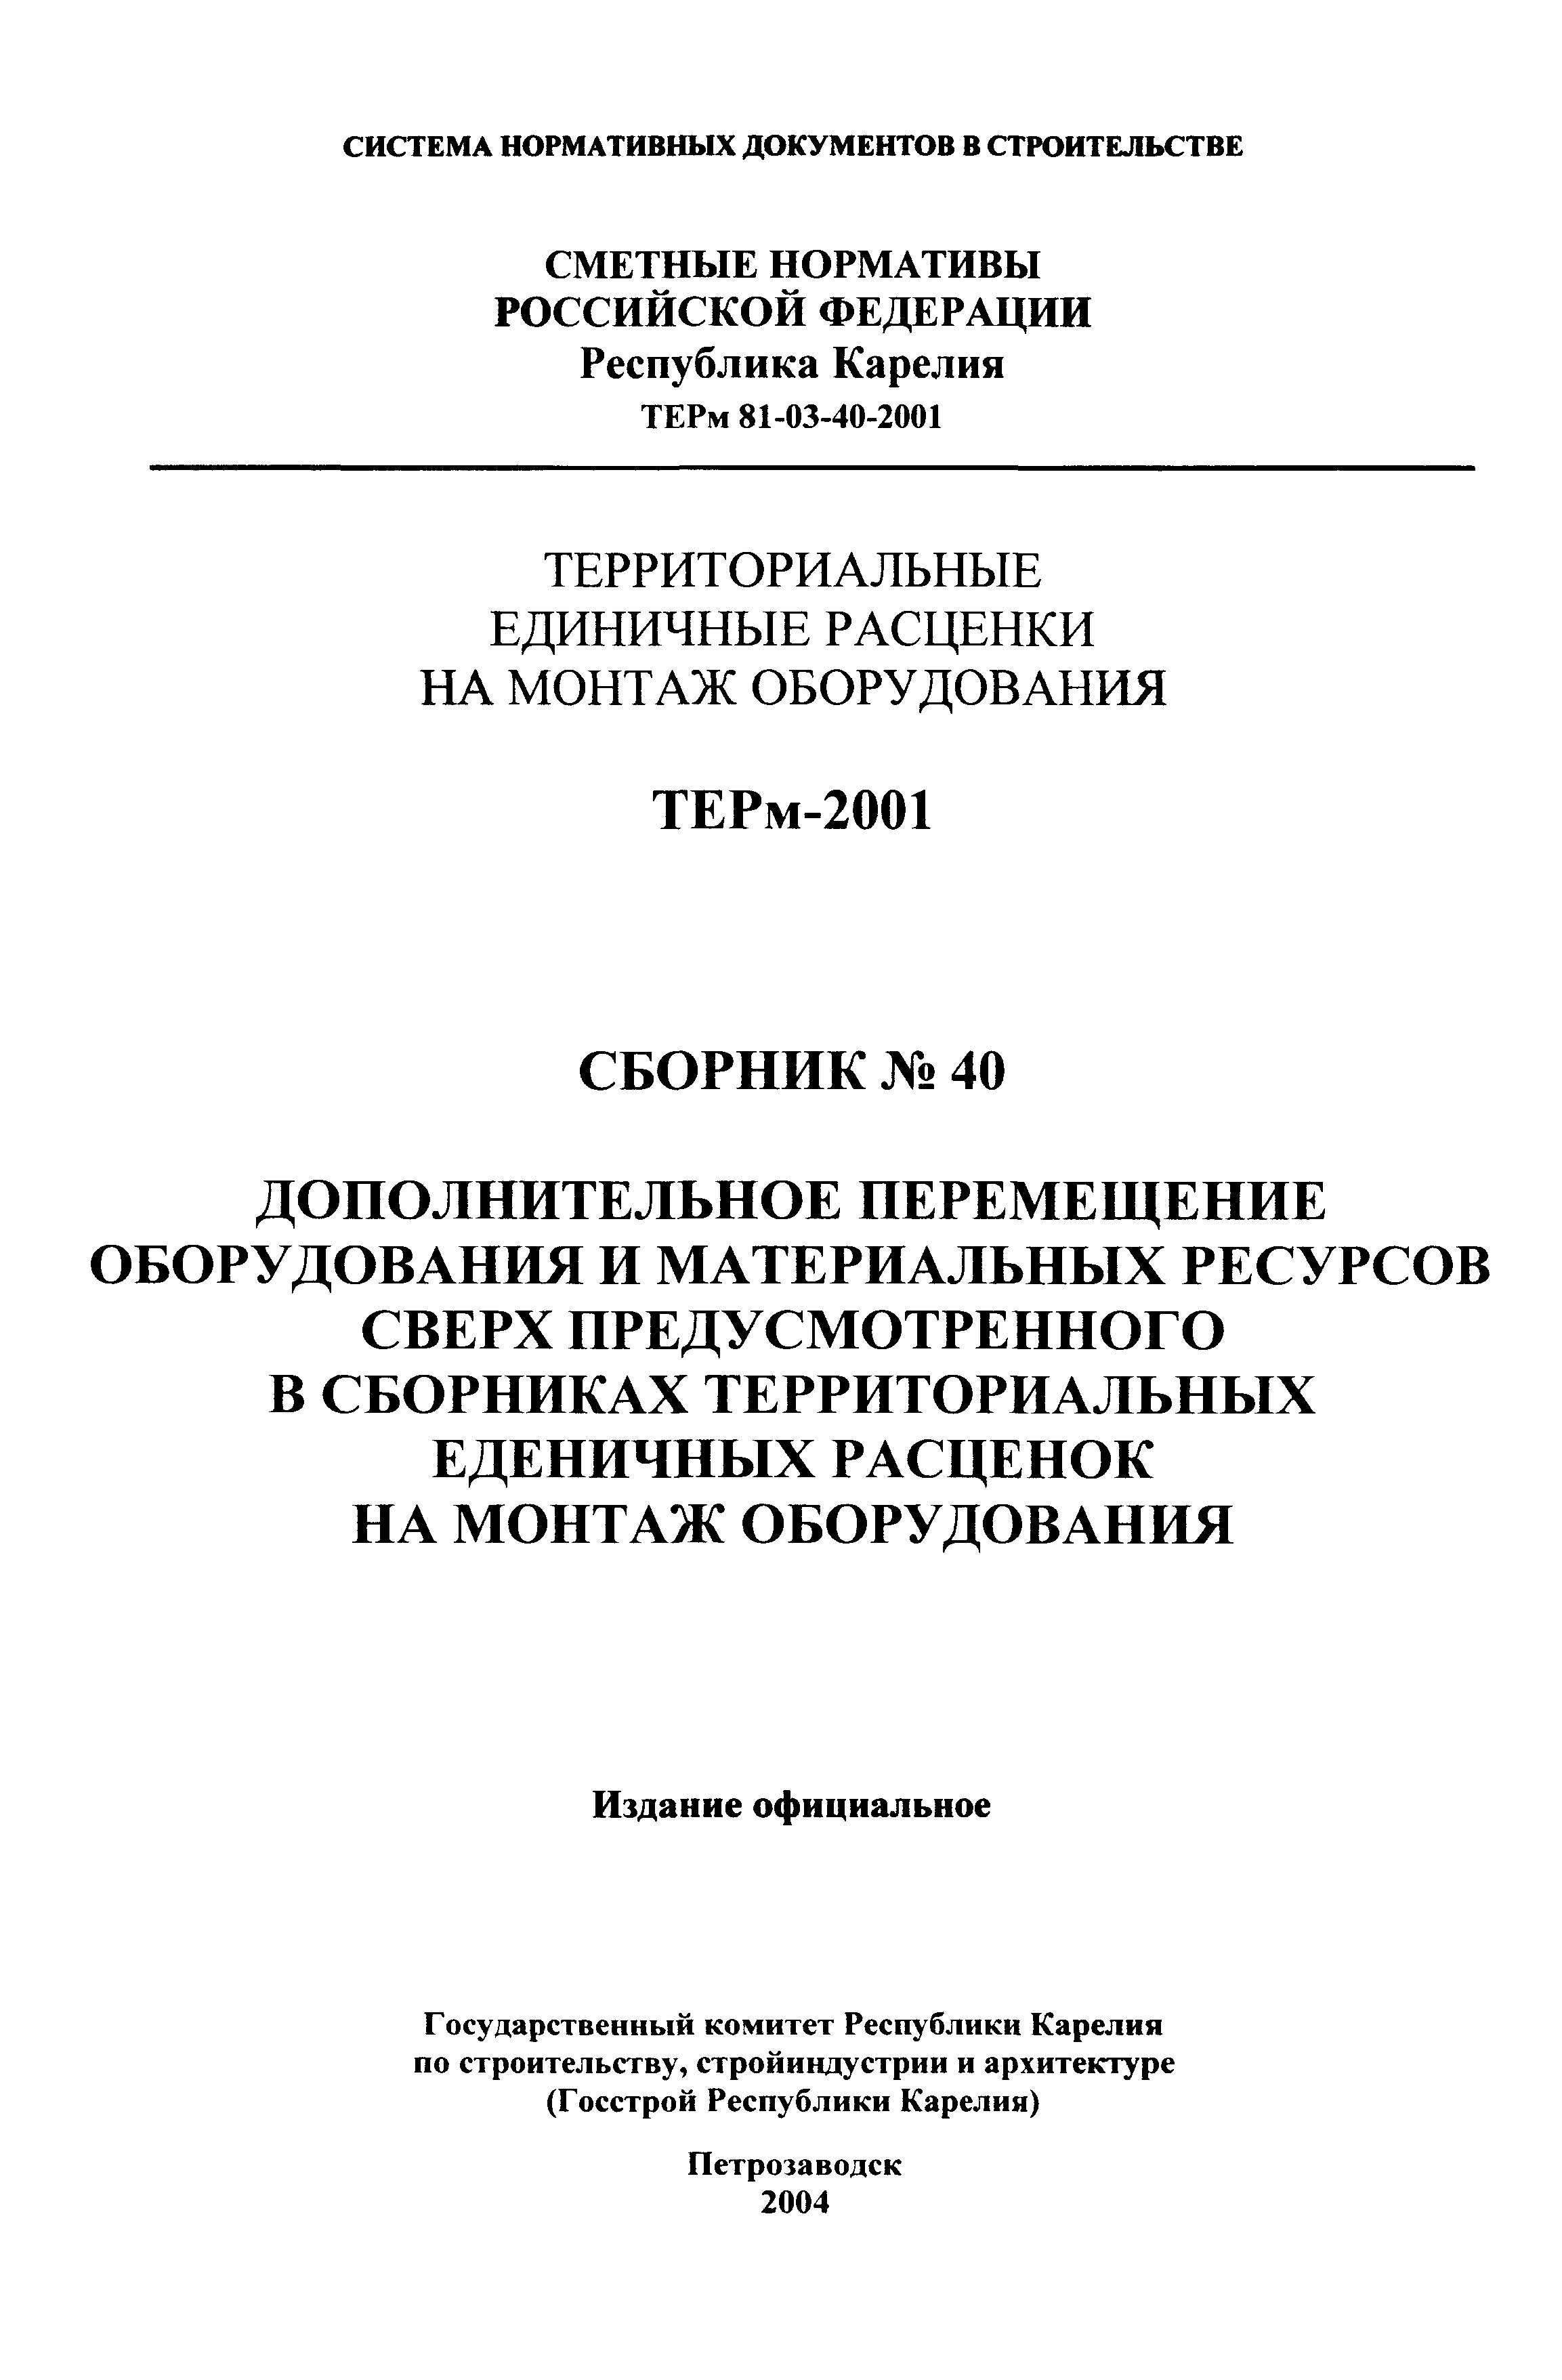 ТЕРм Республика Карелия 2001-40